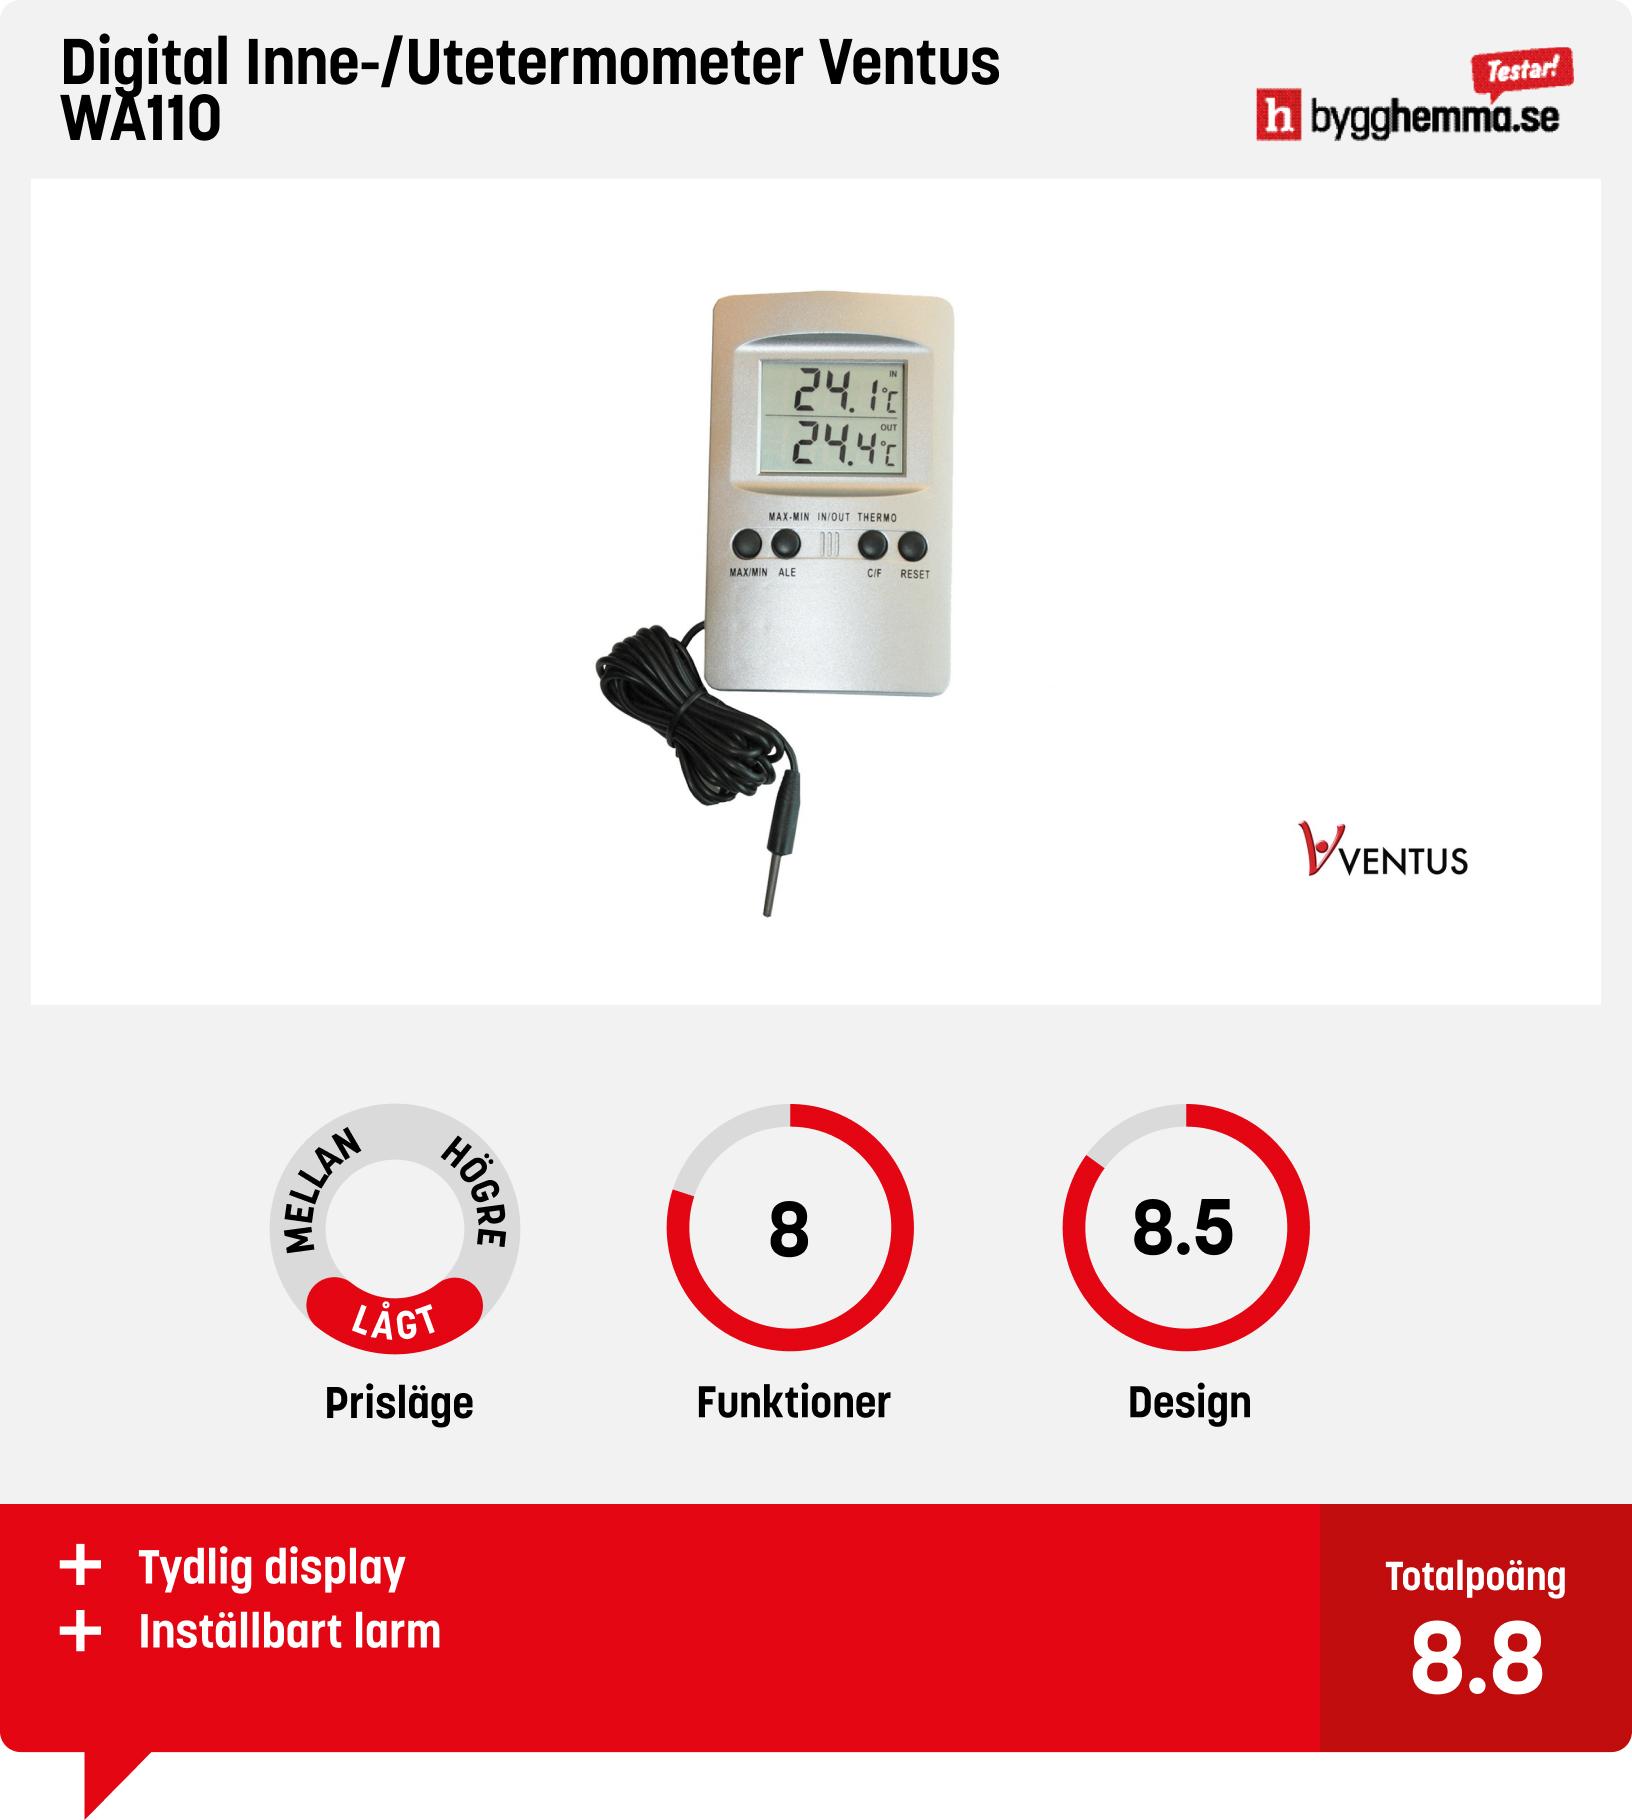 Ute inne termometer bäst i test - Digital Inne-/Utetermometer Ventus WA110